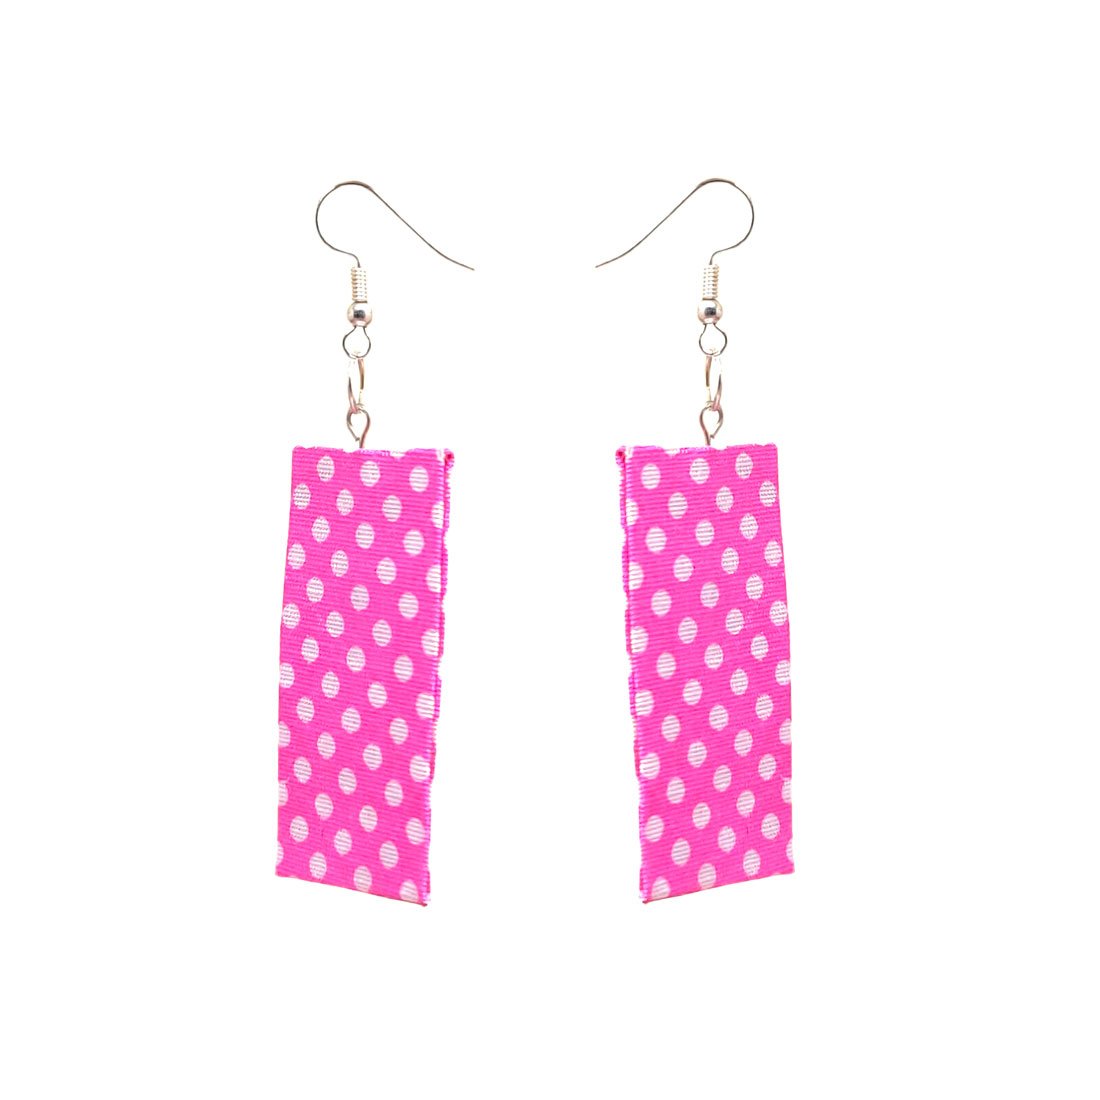 Anokhi Ada Pink Polka Dot Handmade Fabric  Earring for Girls and Women (AN-11) - Anokhiada.com